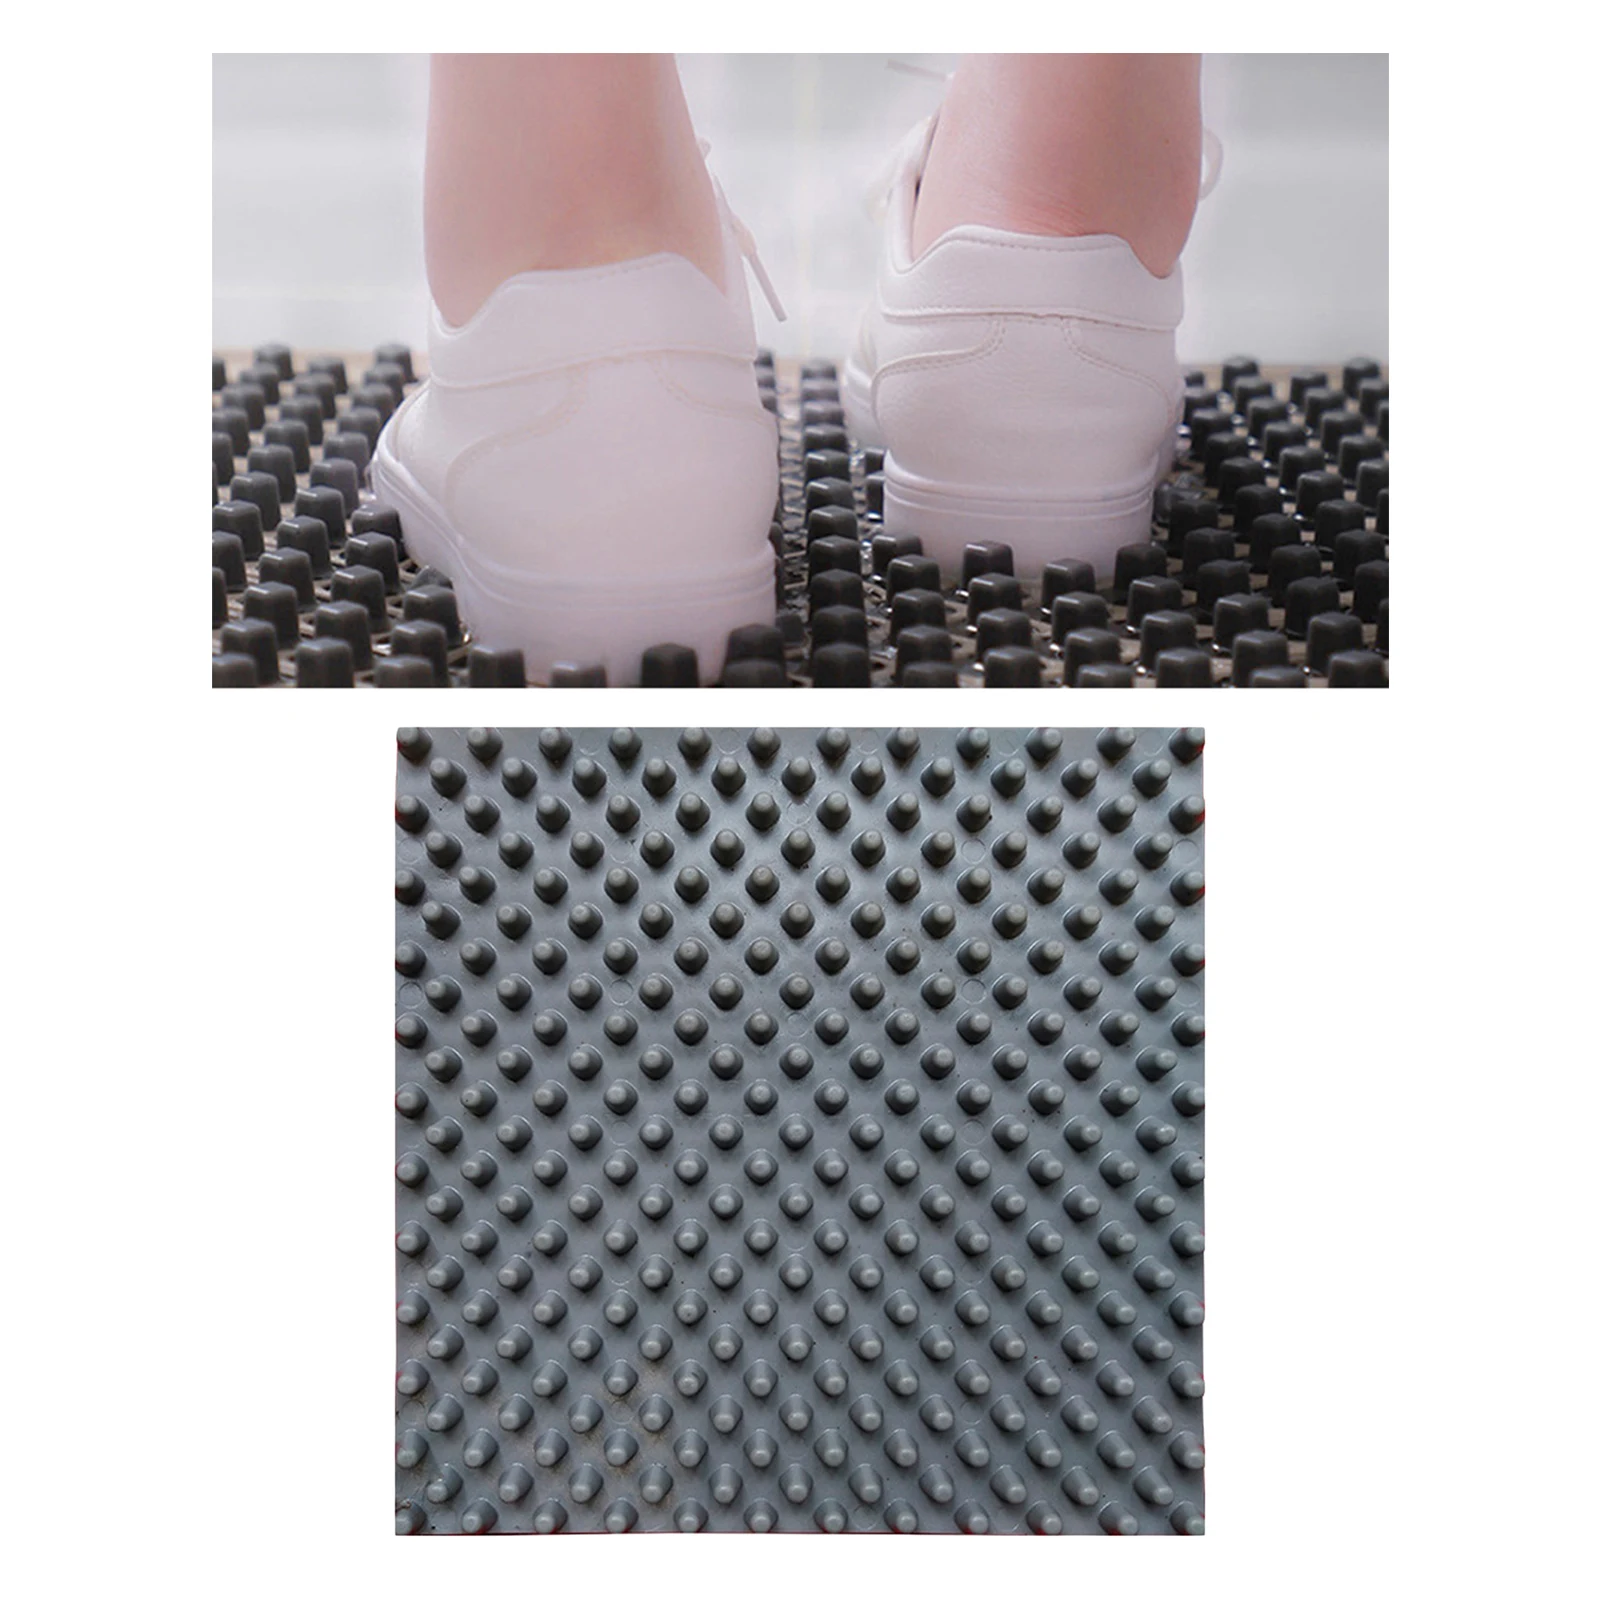 Disinfecting Shoe Mat Sanitizing Footbath Disinfectant Floor Mat Doormat